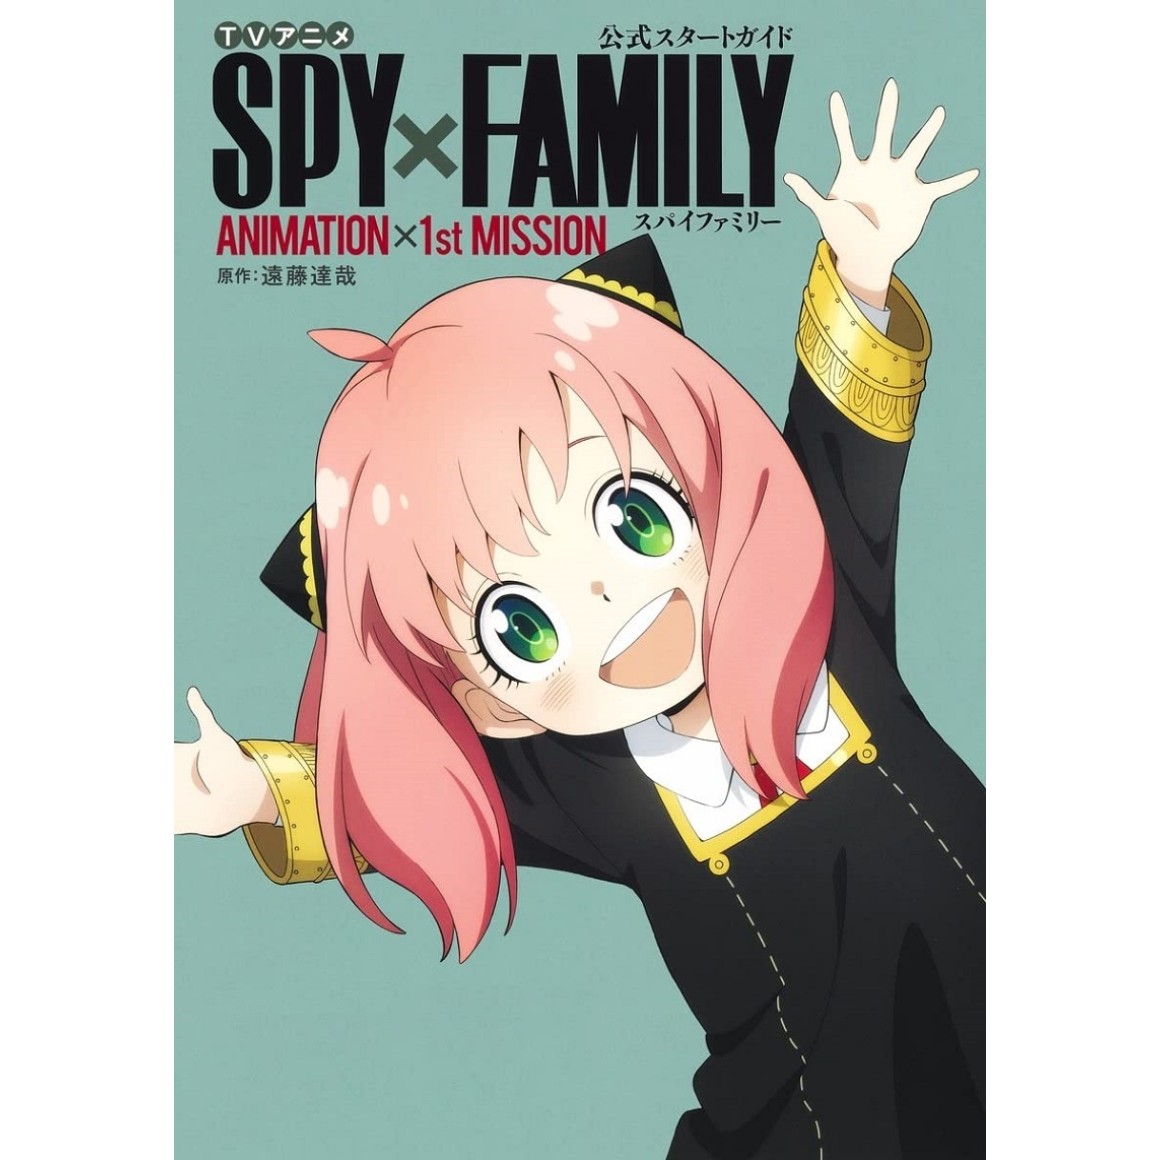 Mangás Brasil on X: Ilustração especial do anime Spy x Family